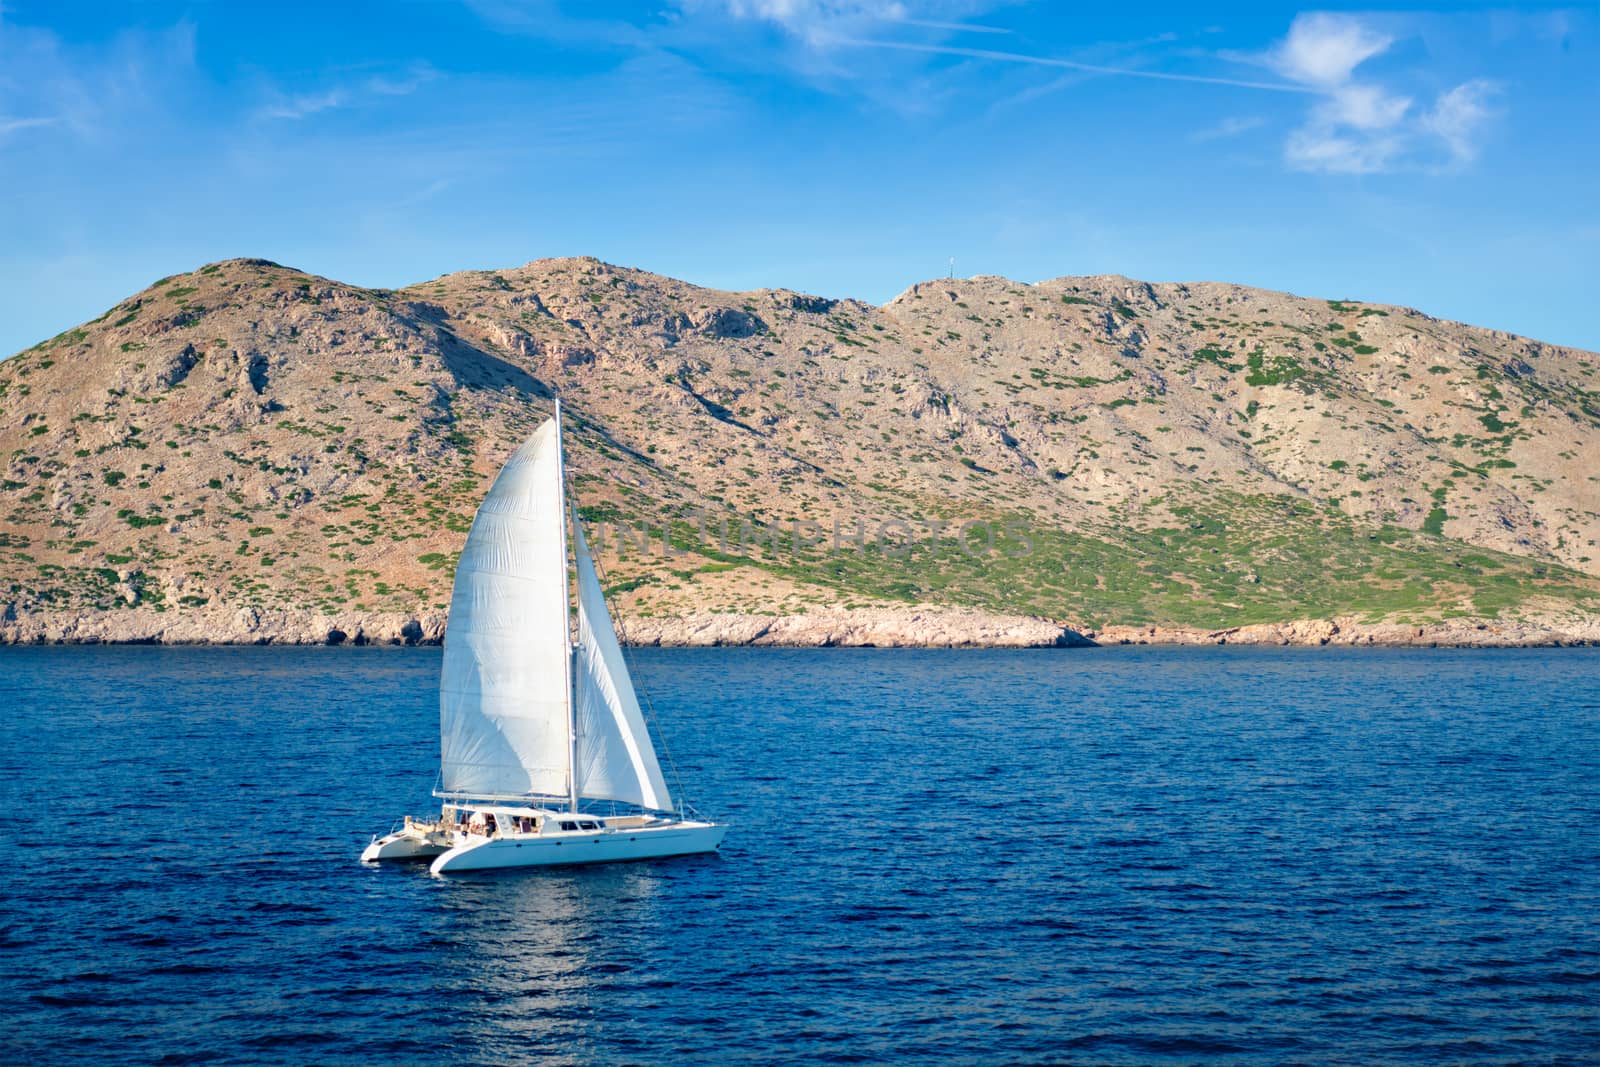 Catamaran yacht in Aegean Sea by dimol